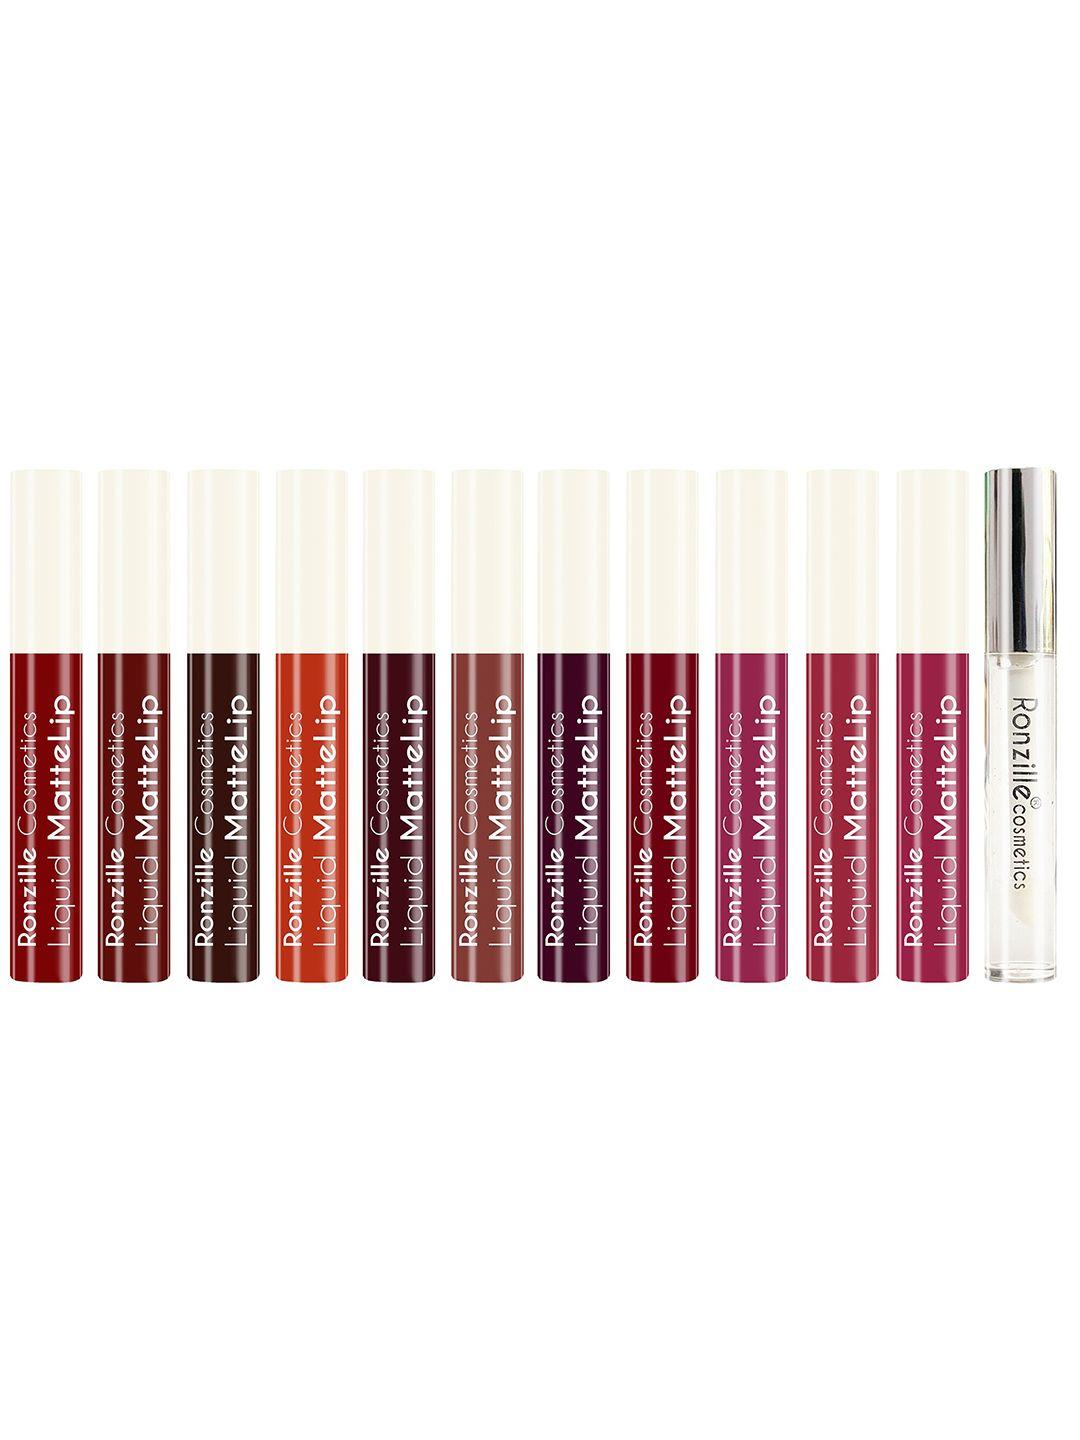 ronzille set of 12 multi liquid lipsticks